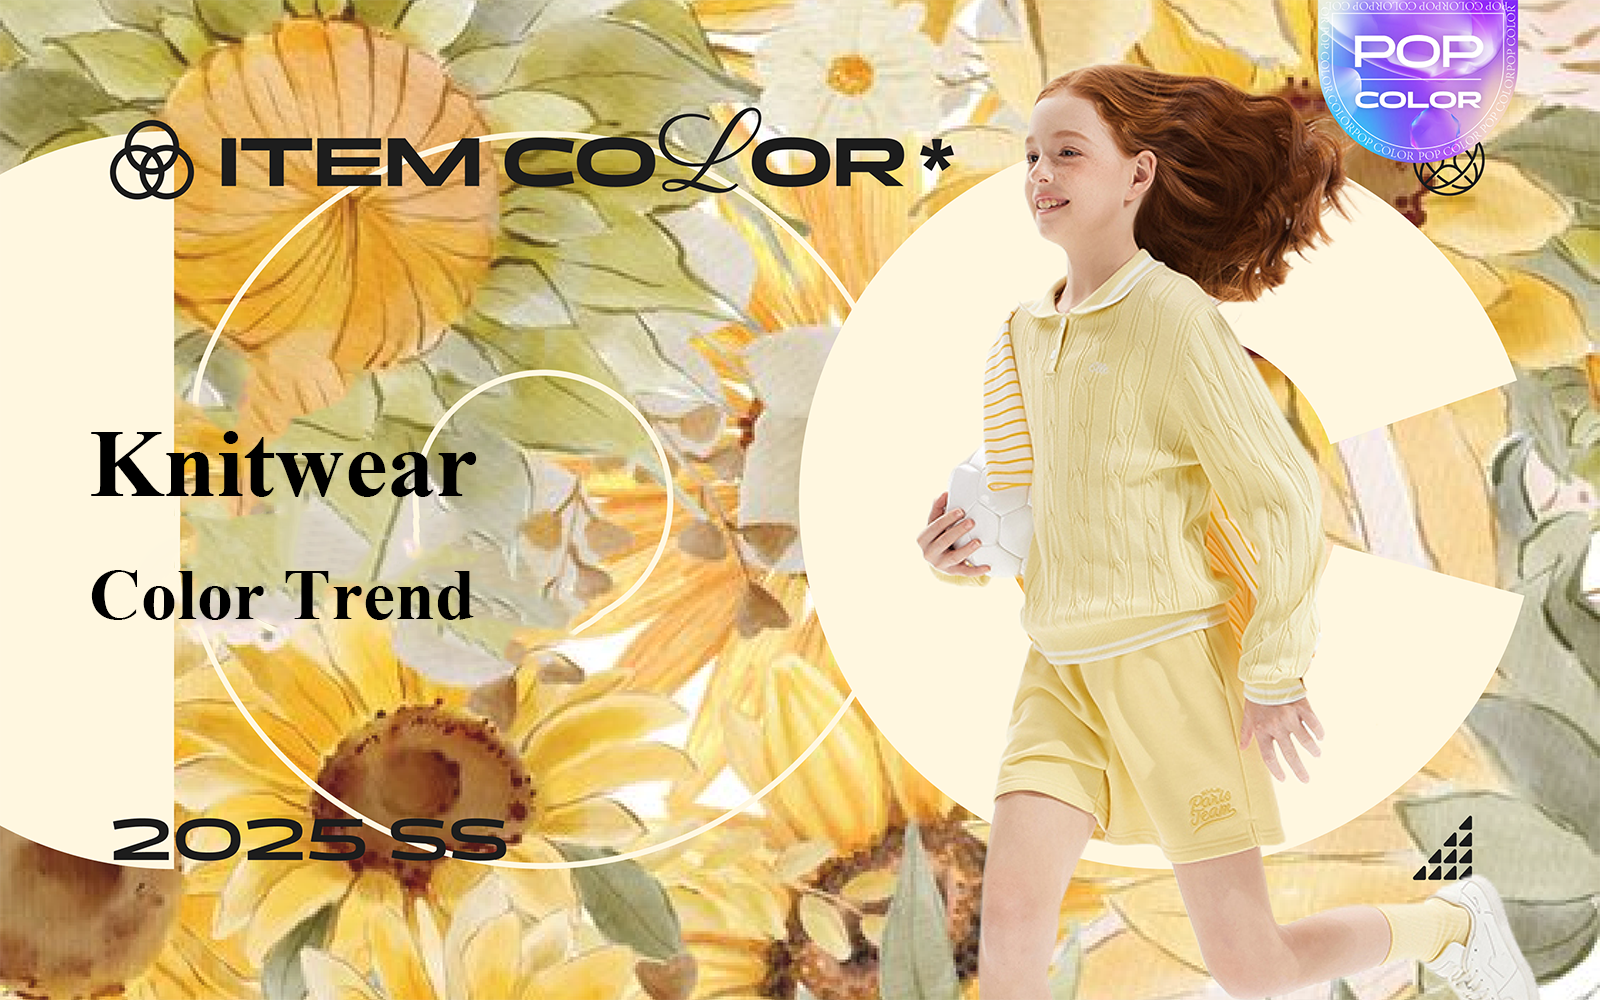 Knitwear -- The Color Trend for Kidswear